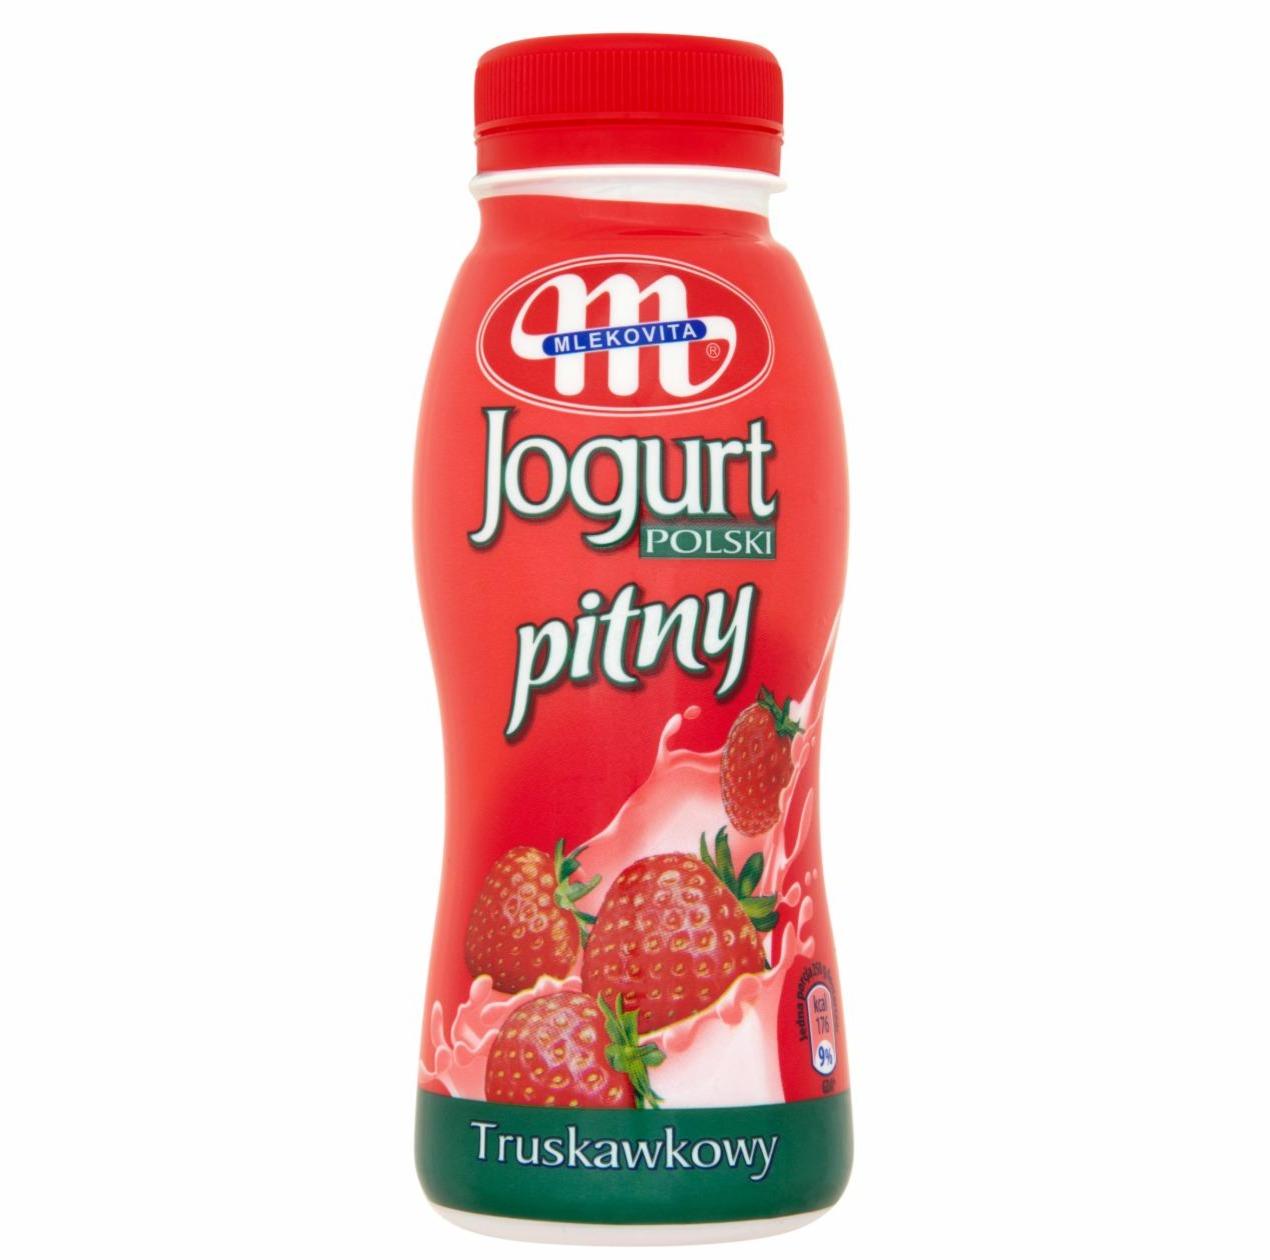 Photo - Mlekovita Strawberry Polish Yoghurt 250 g